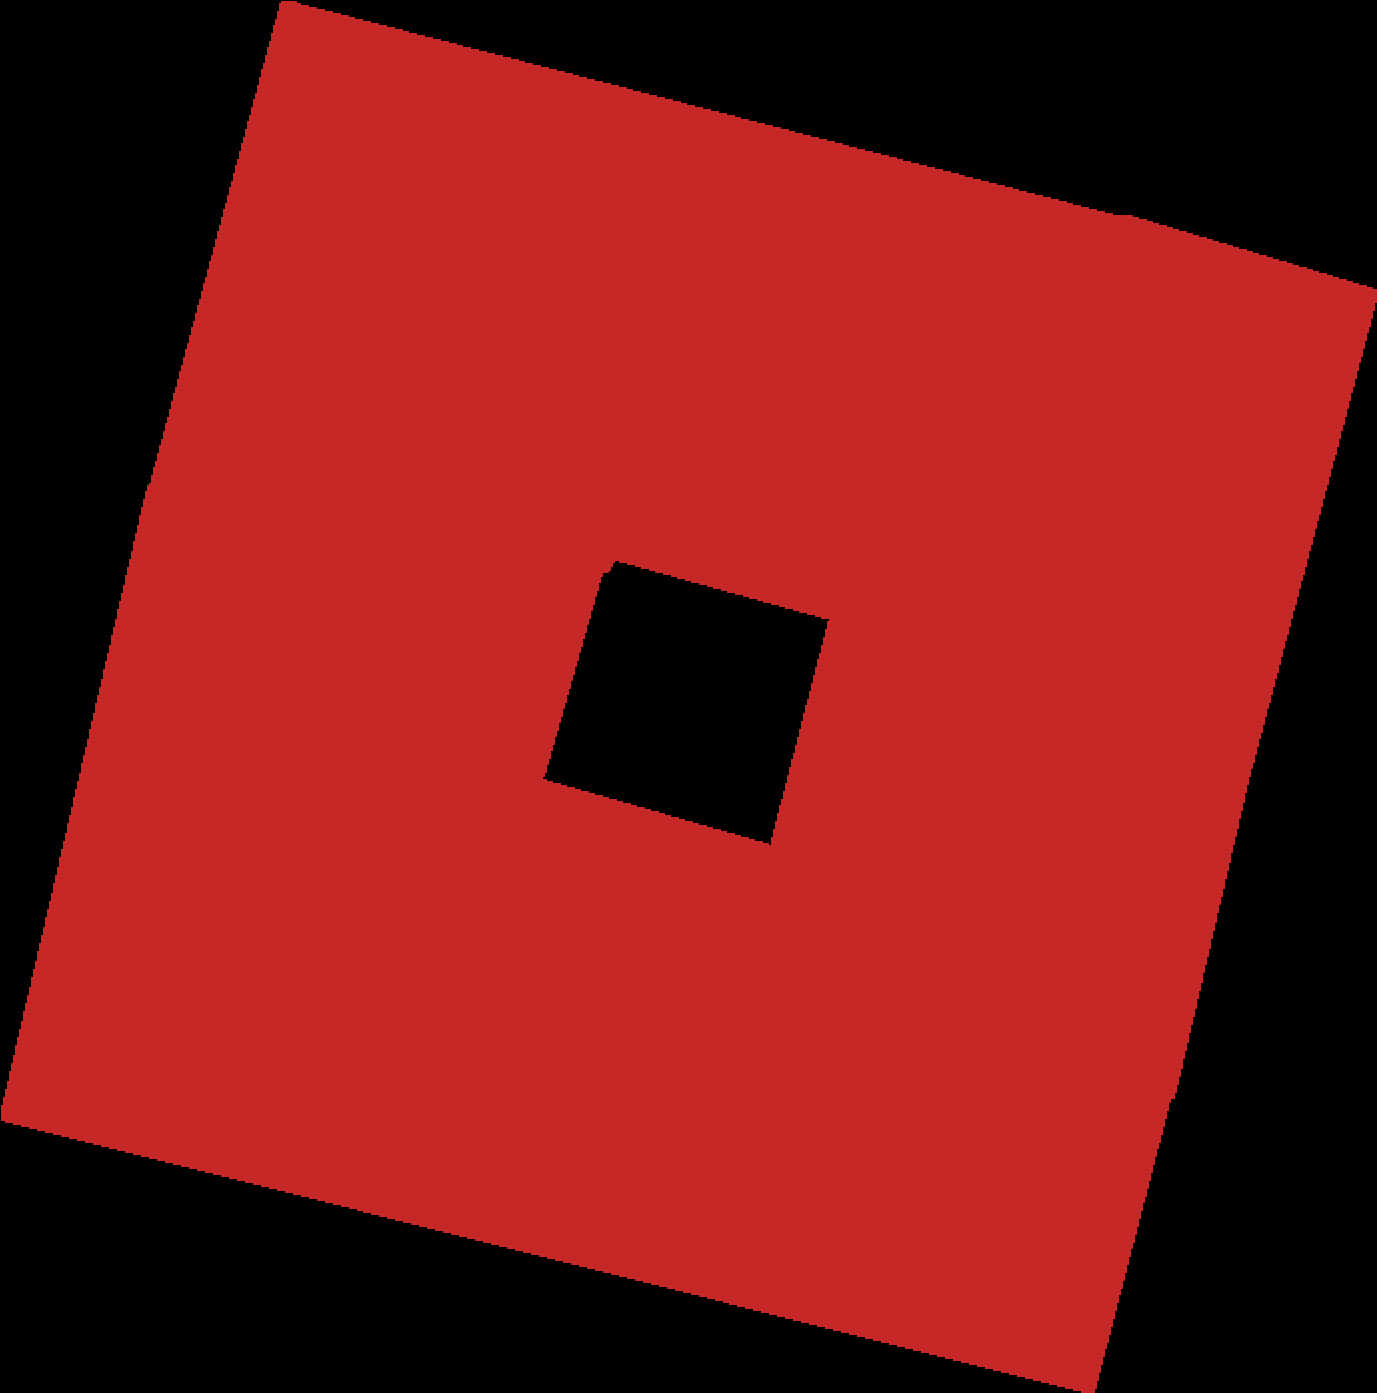 Roblox Logo Redand Black PNG image